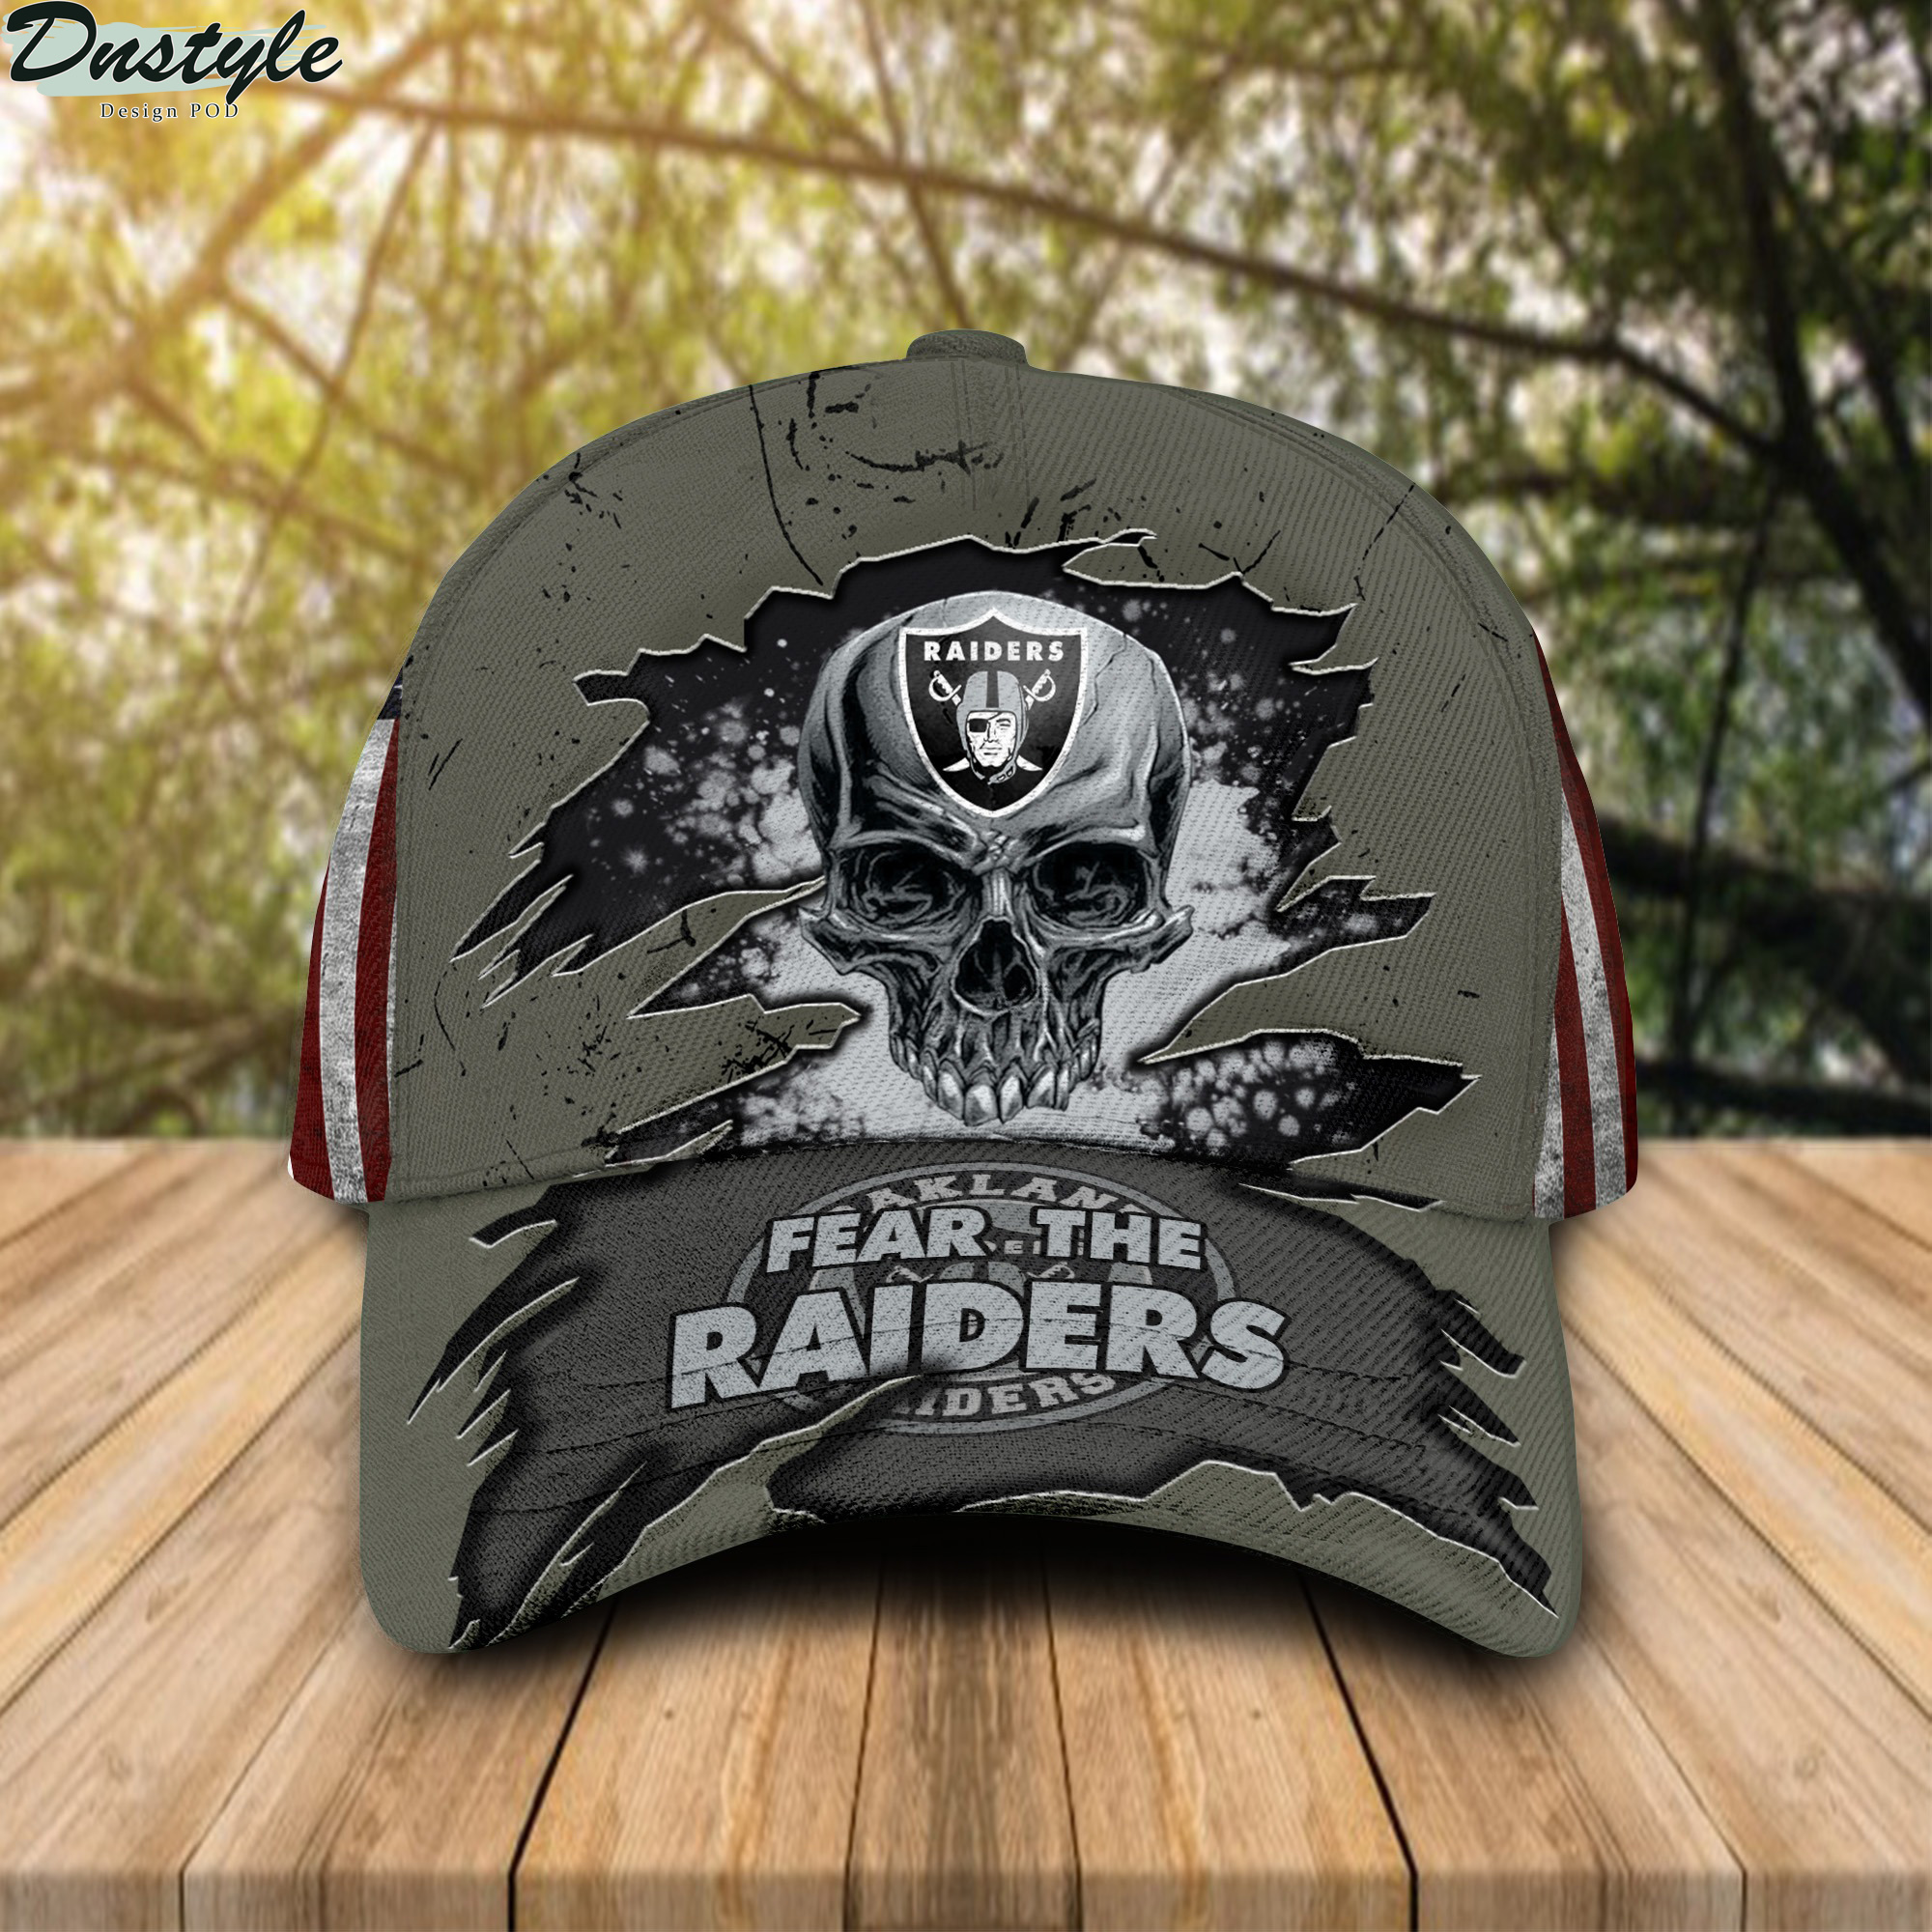 Oakland Raiders fear the Raiders cap